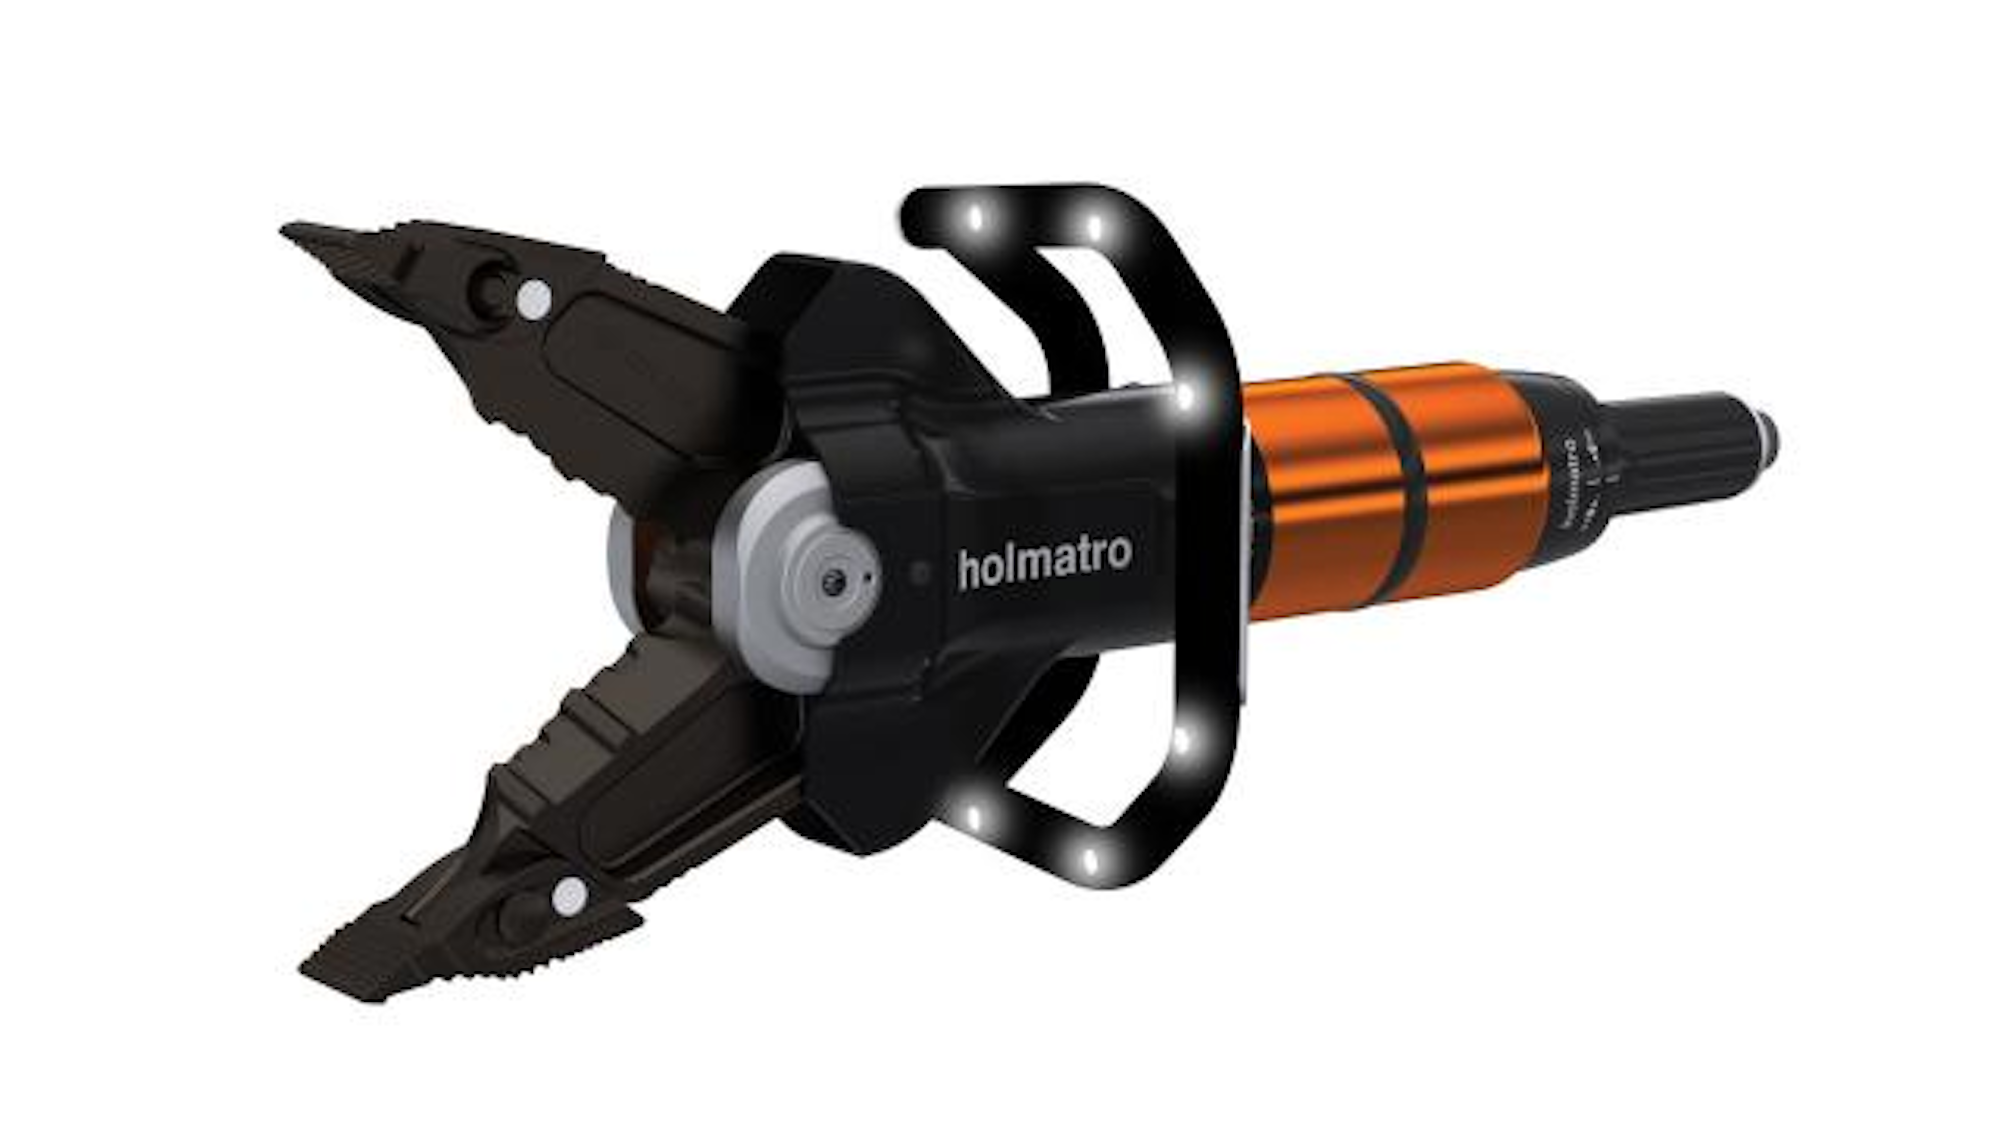 Holmatro Presents New Compact HighPerformance Combi Tool Firehouse